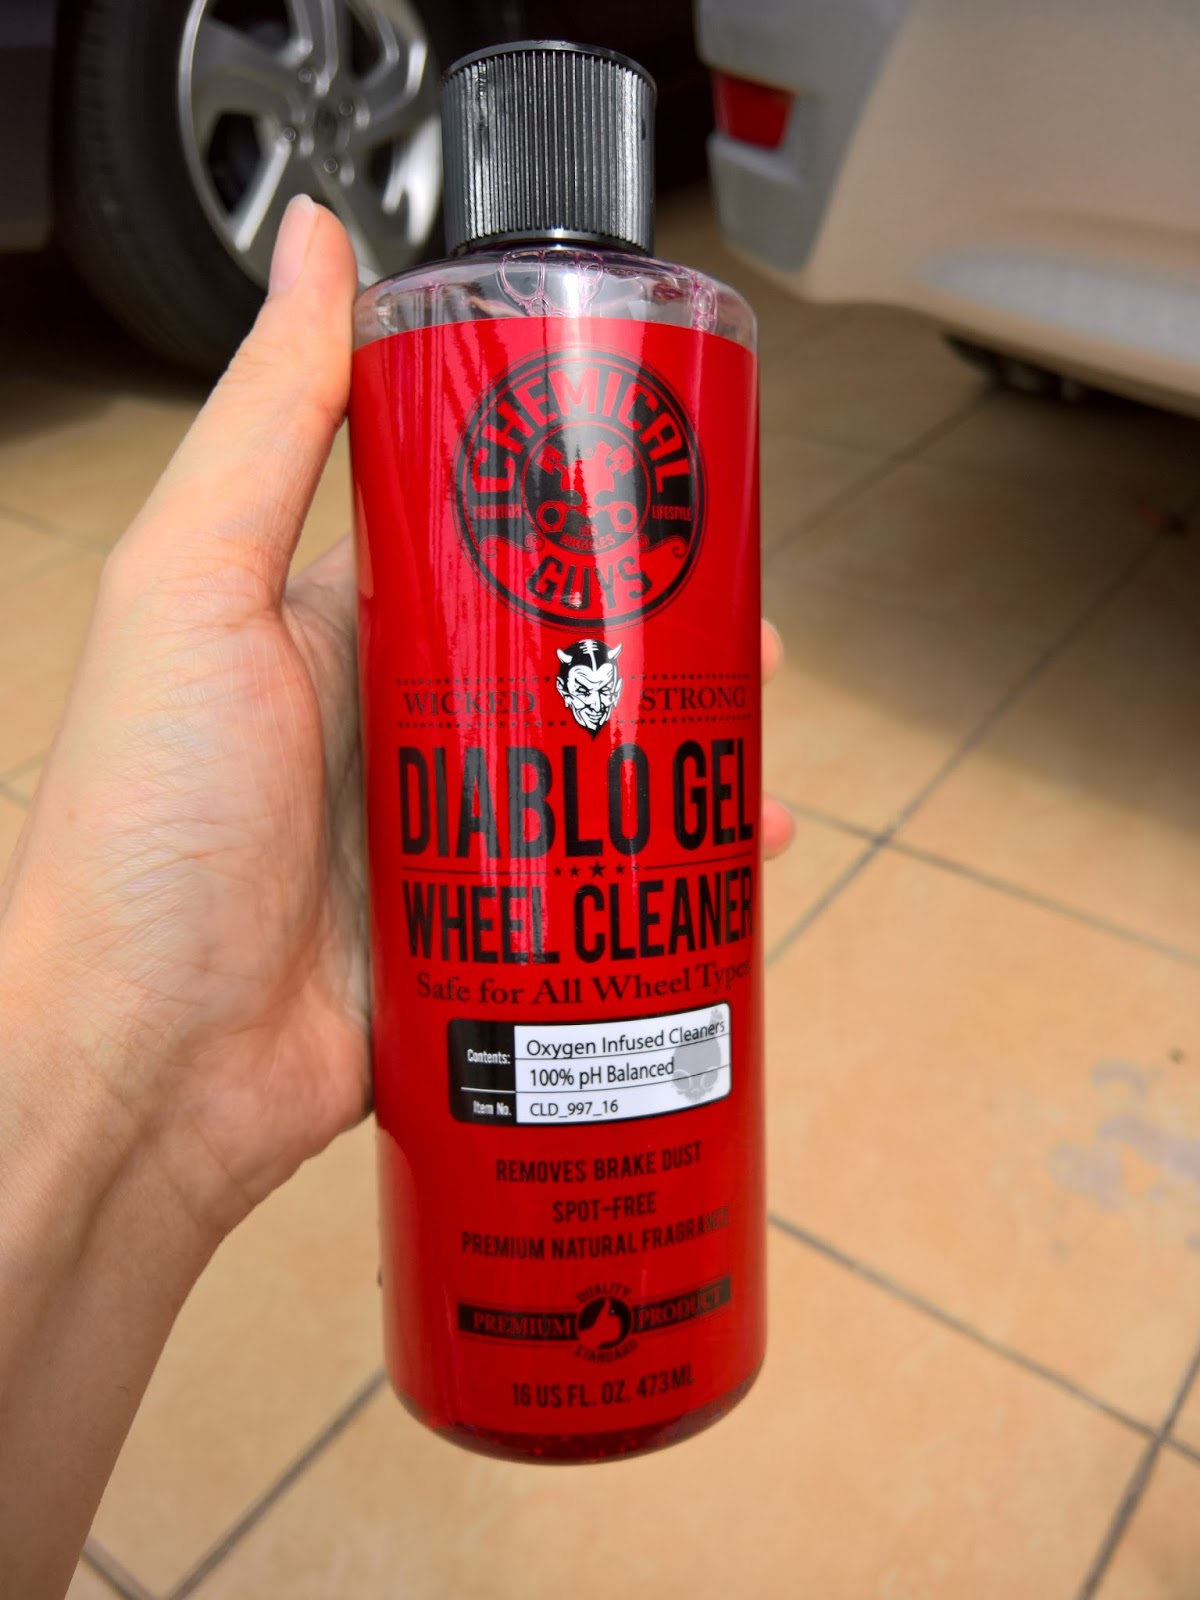 Chemical Guys Diablo Gel Wheel & Rim Cleaner 16oz bottle